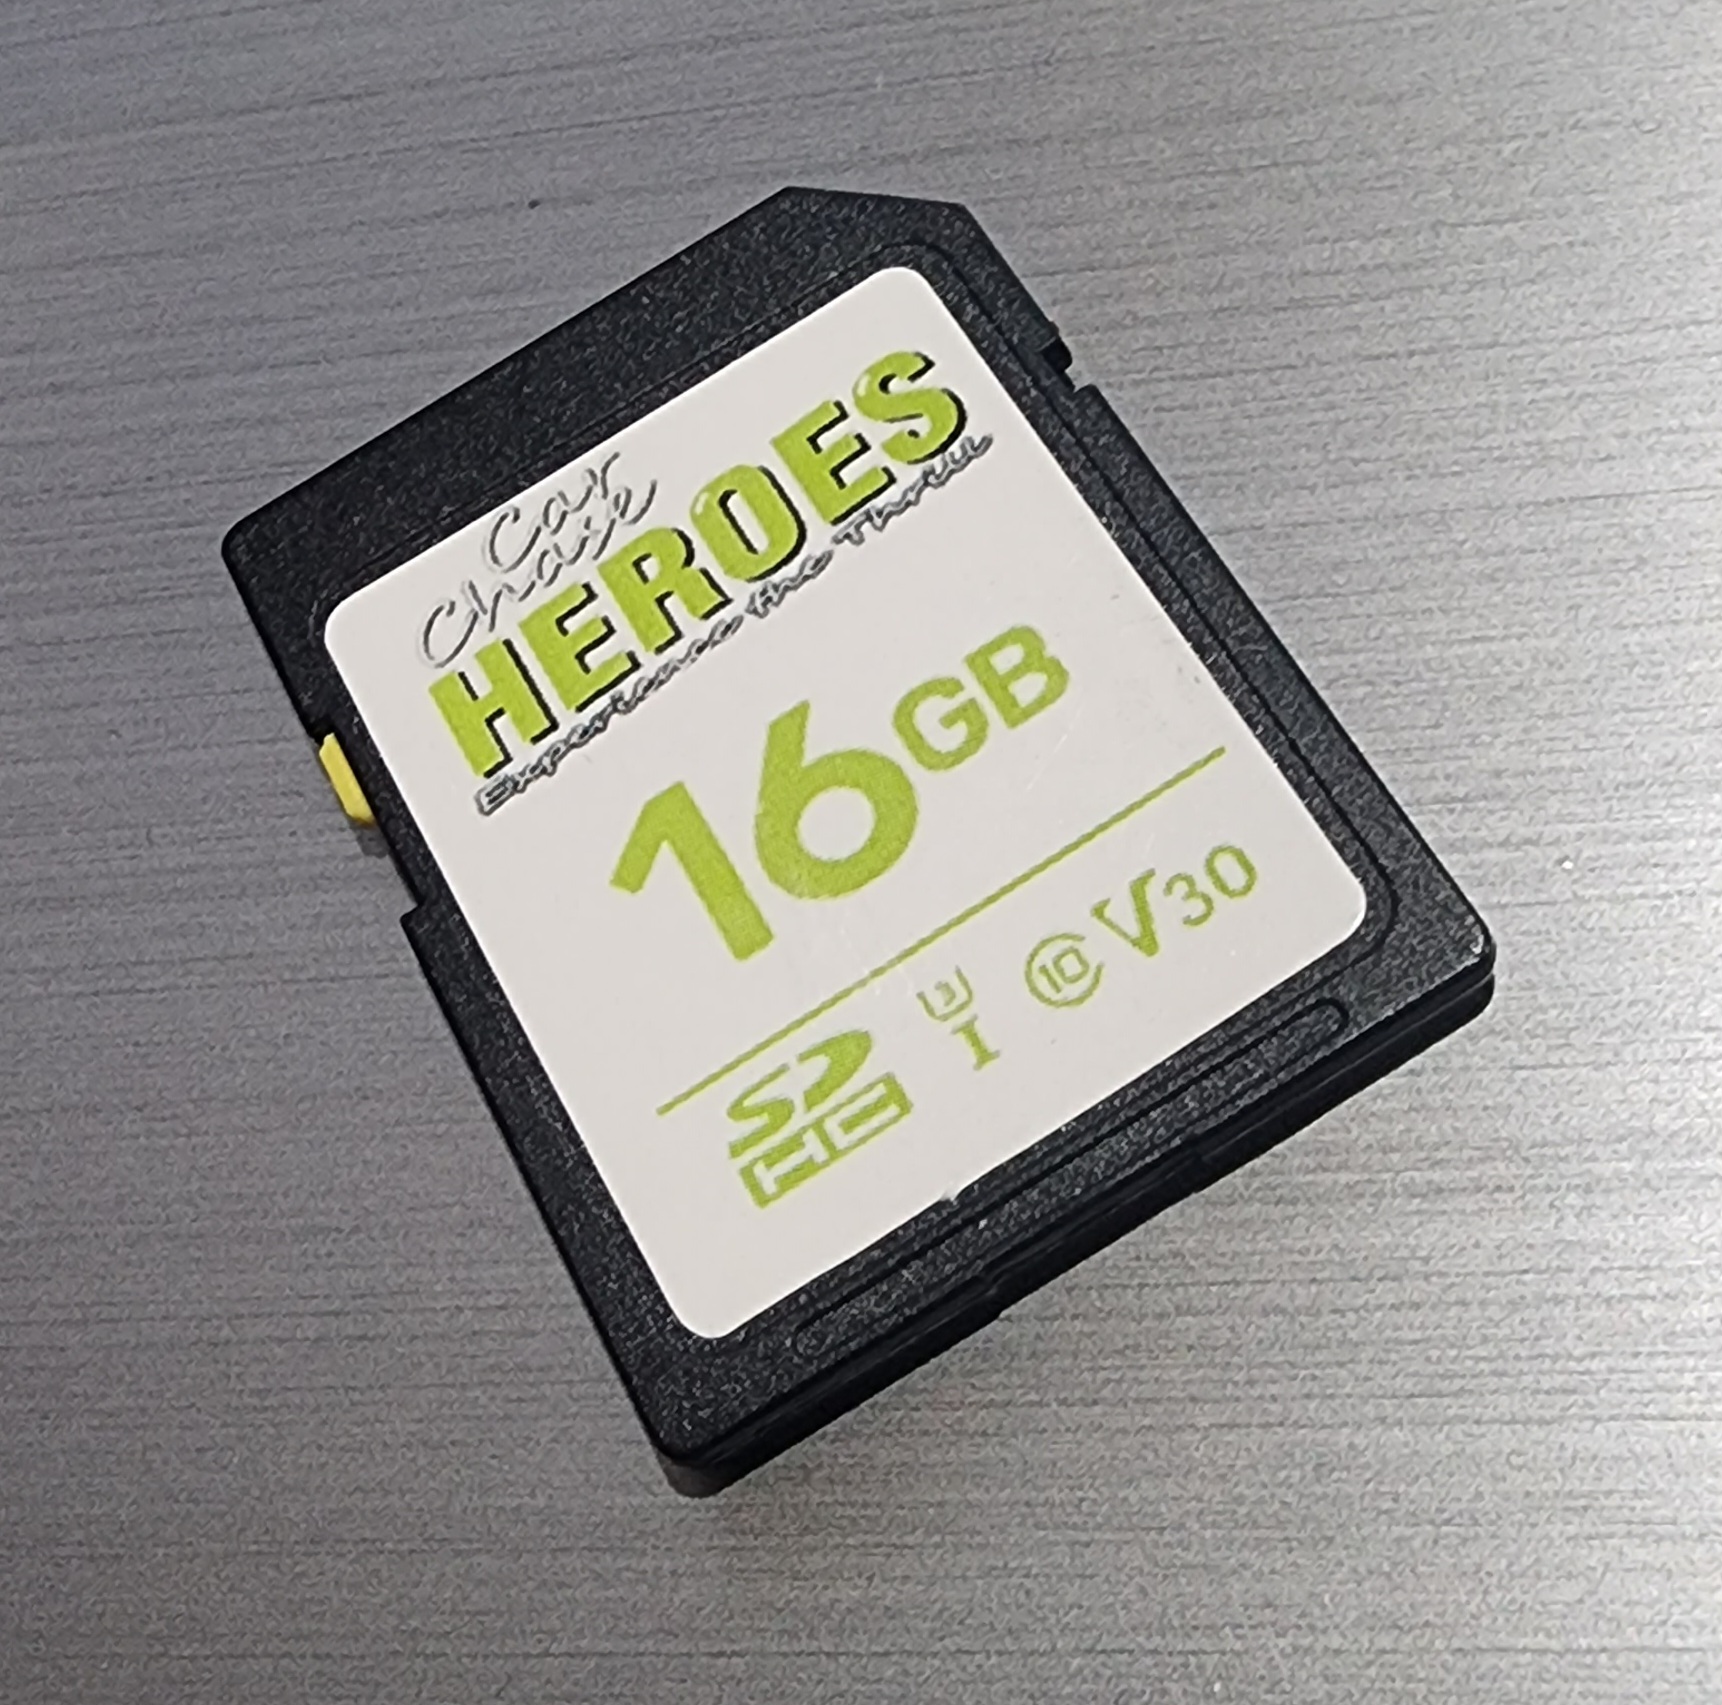 16GB CCH SD card